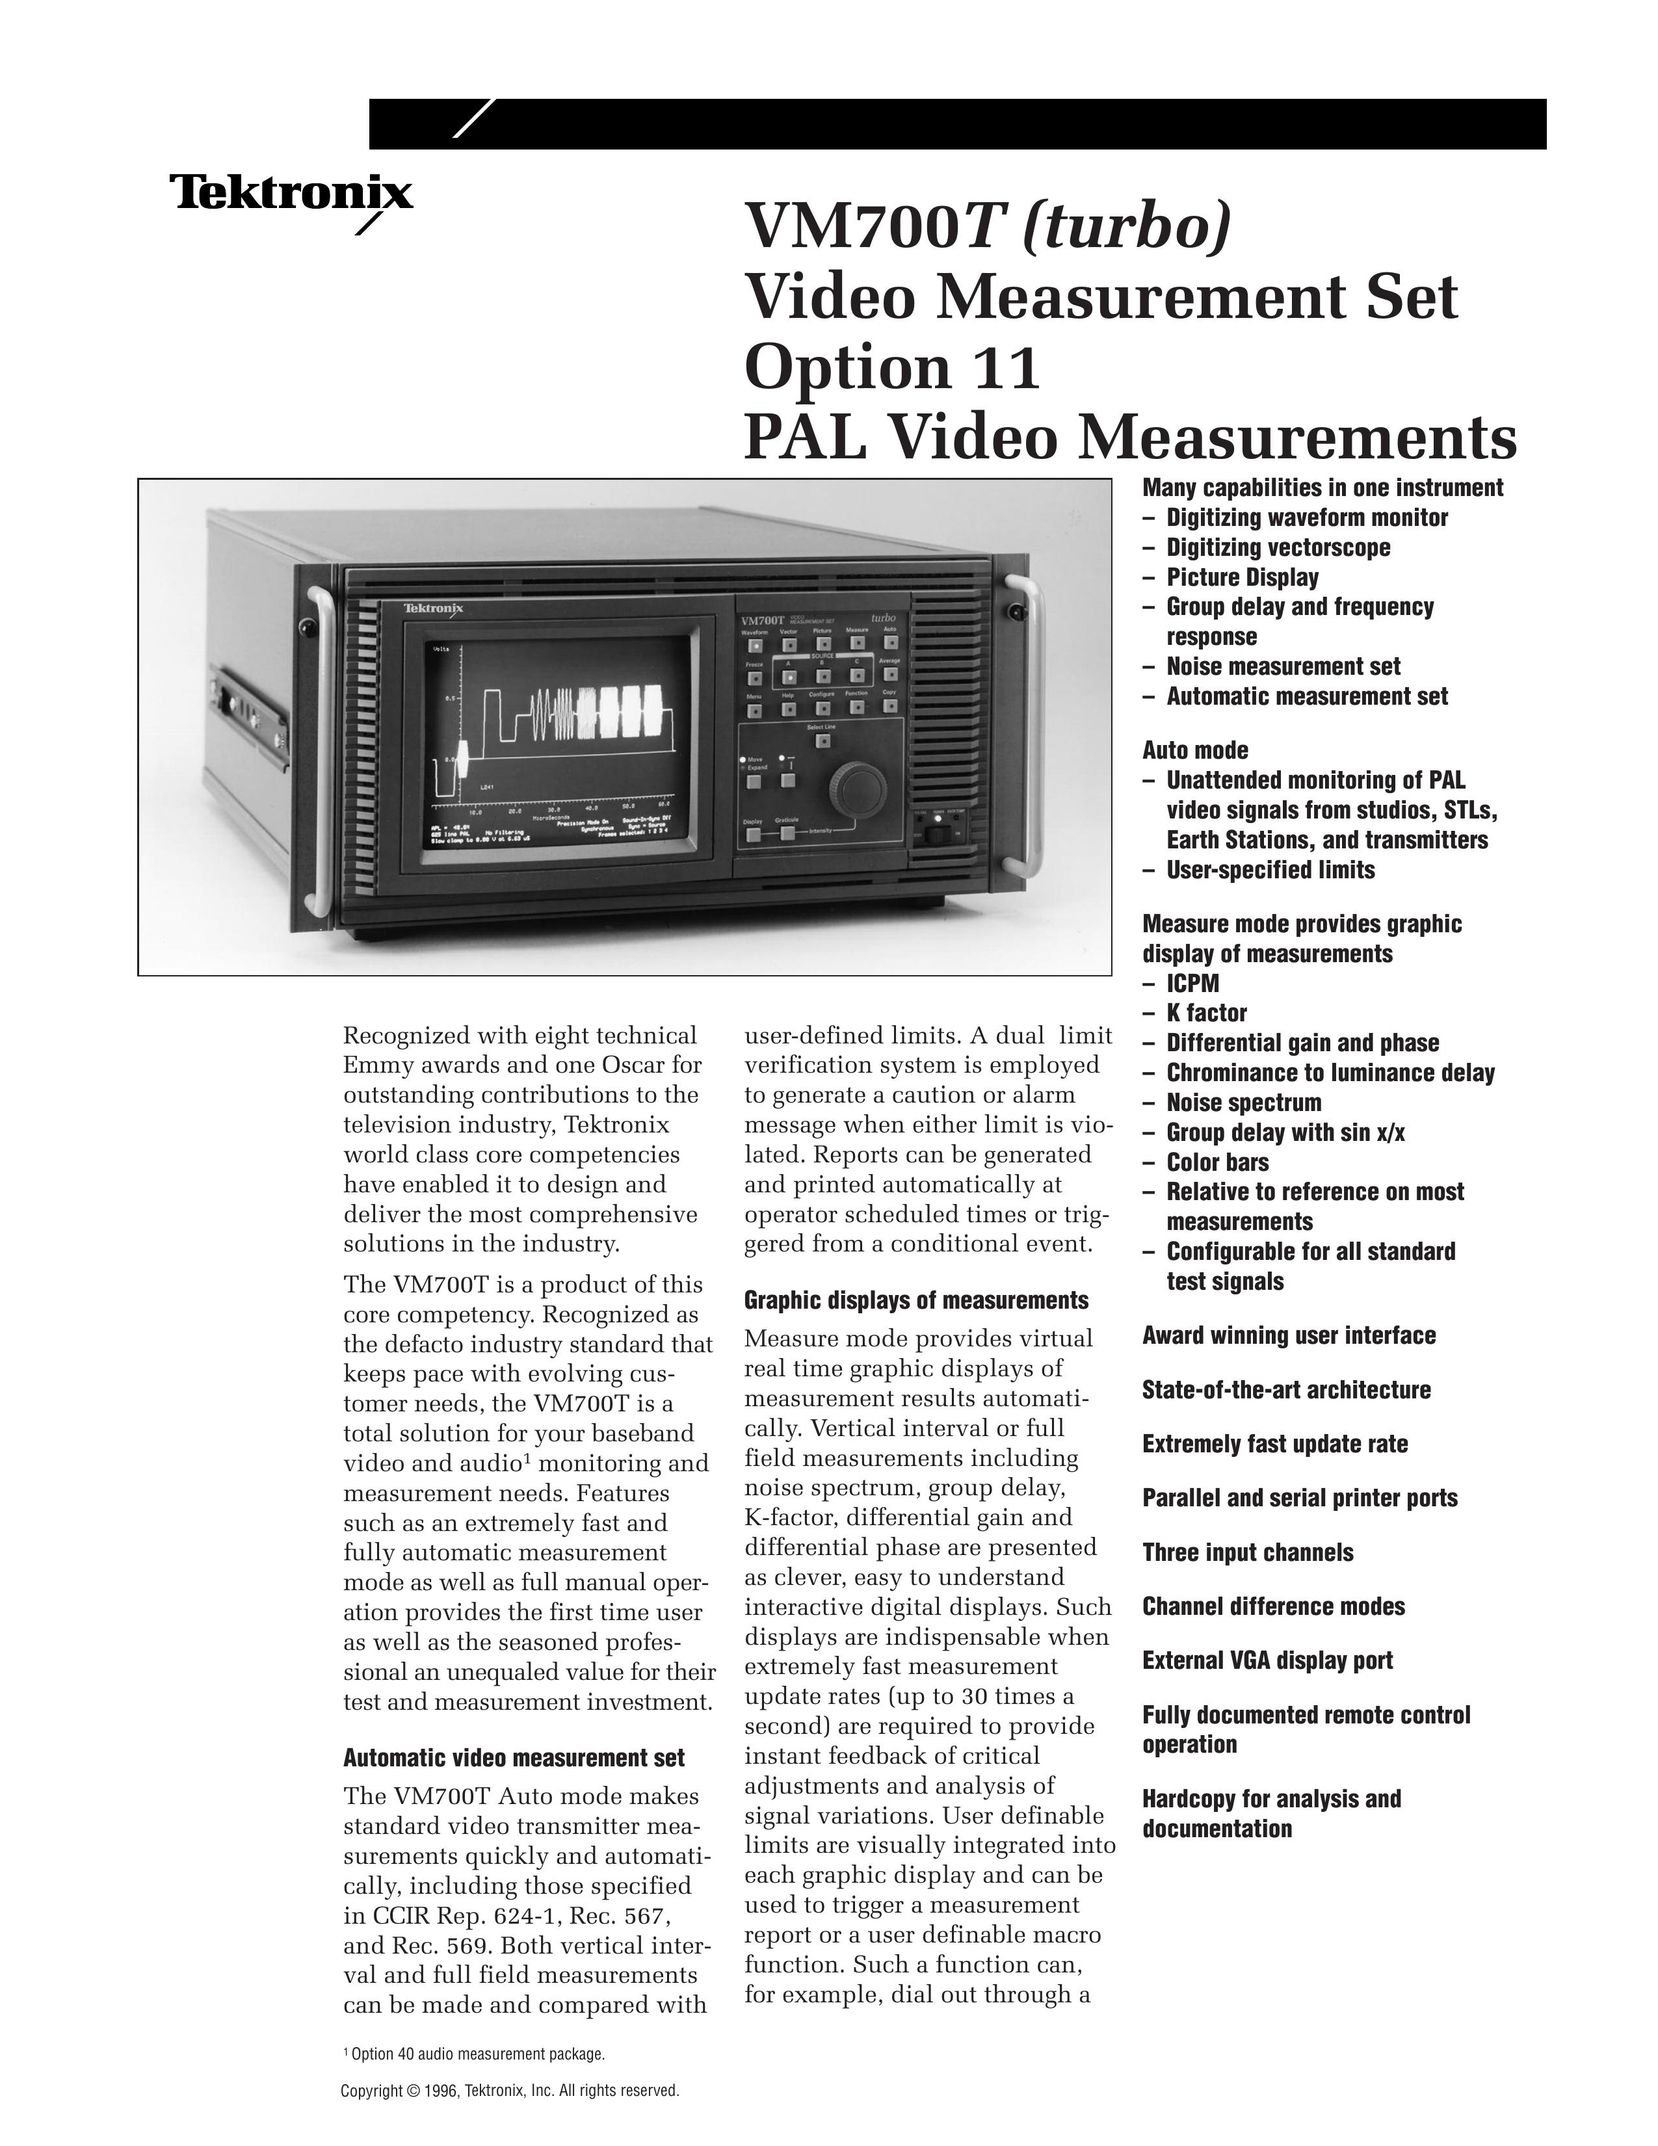 Tektronix VM700T Stereo Receiver User Manual